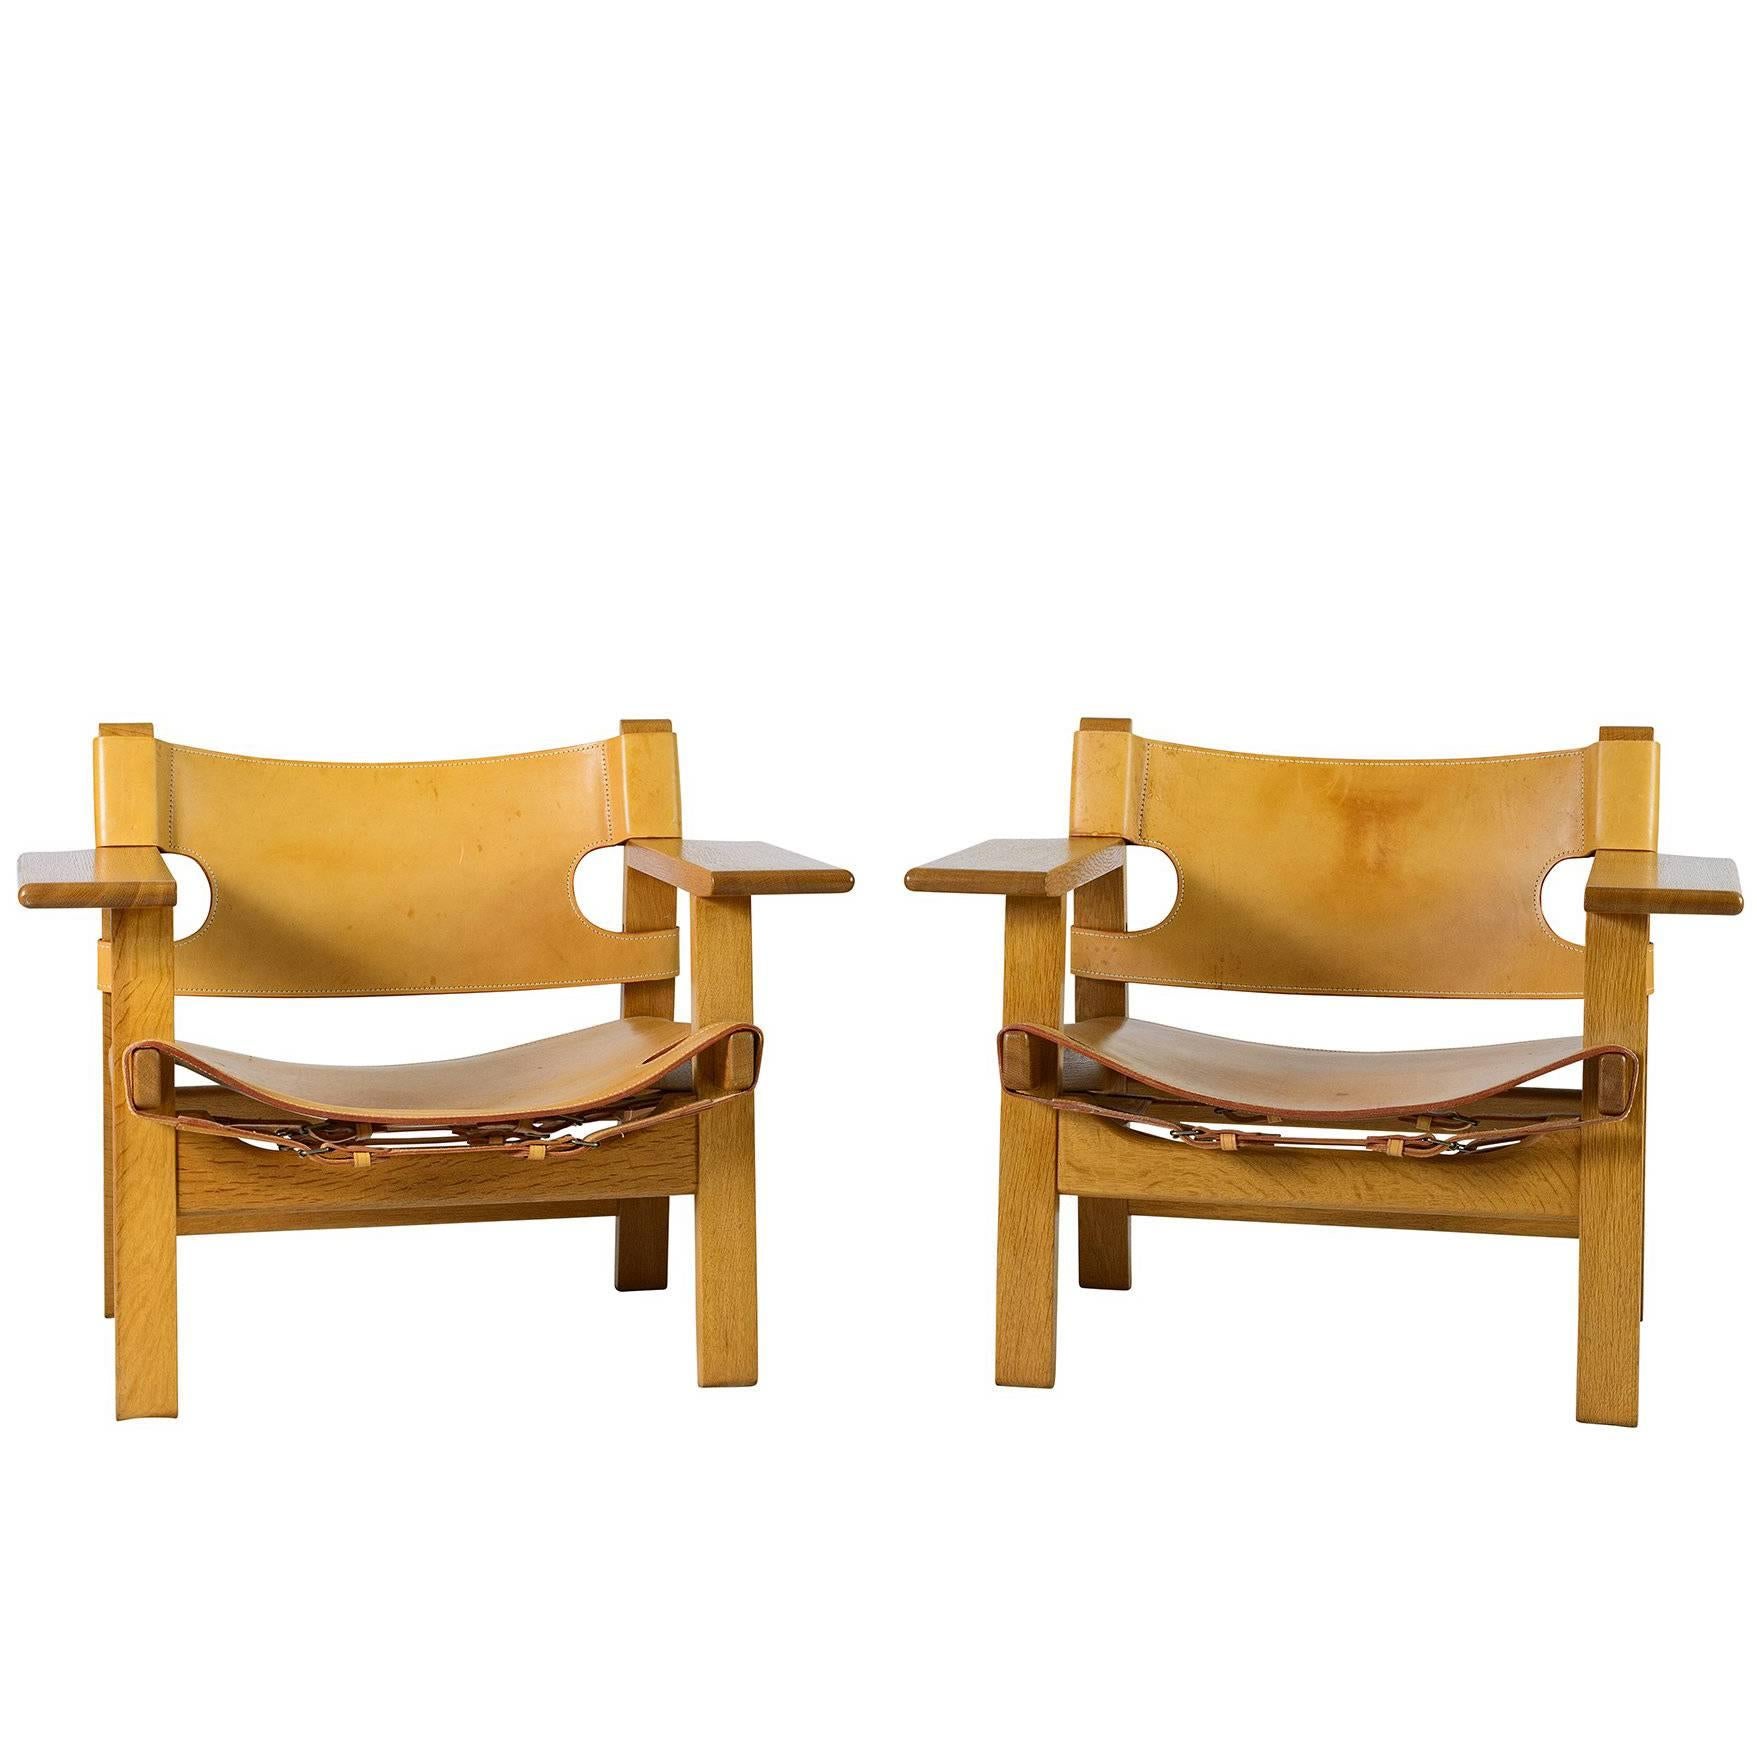 Pair of Børge Mogensen "Spanish" Chairs